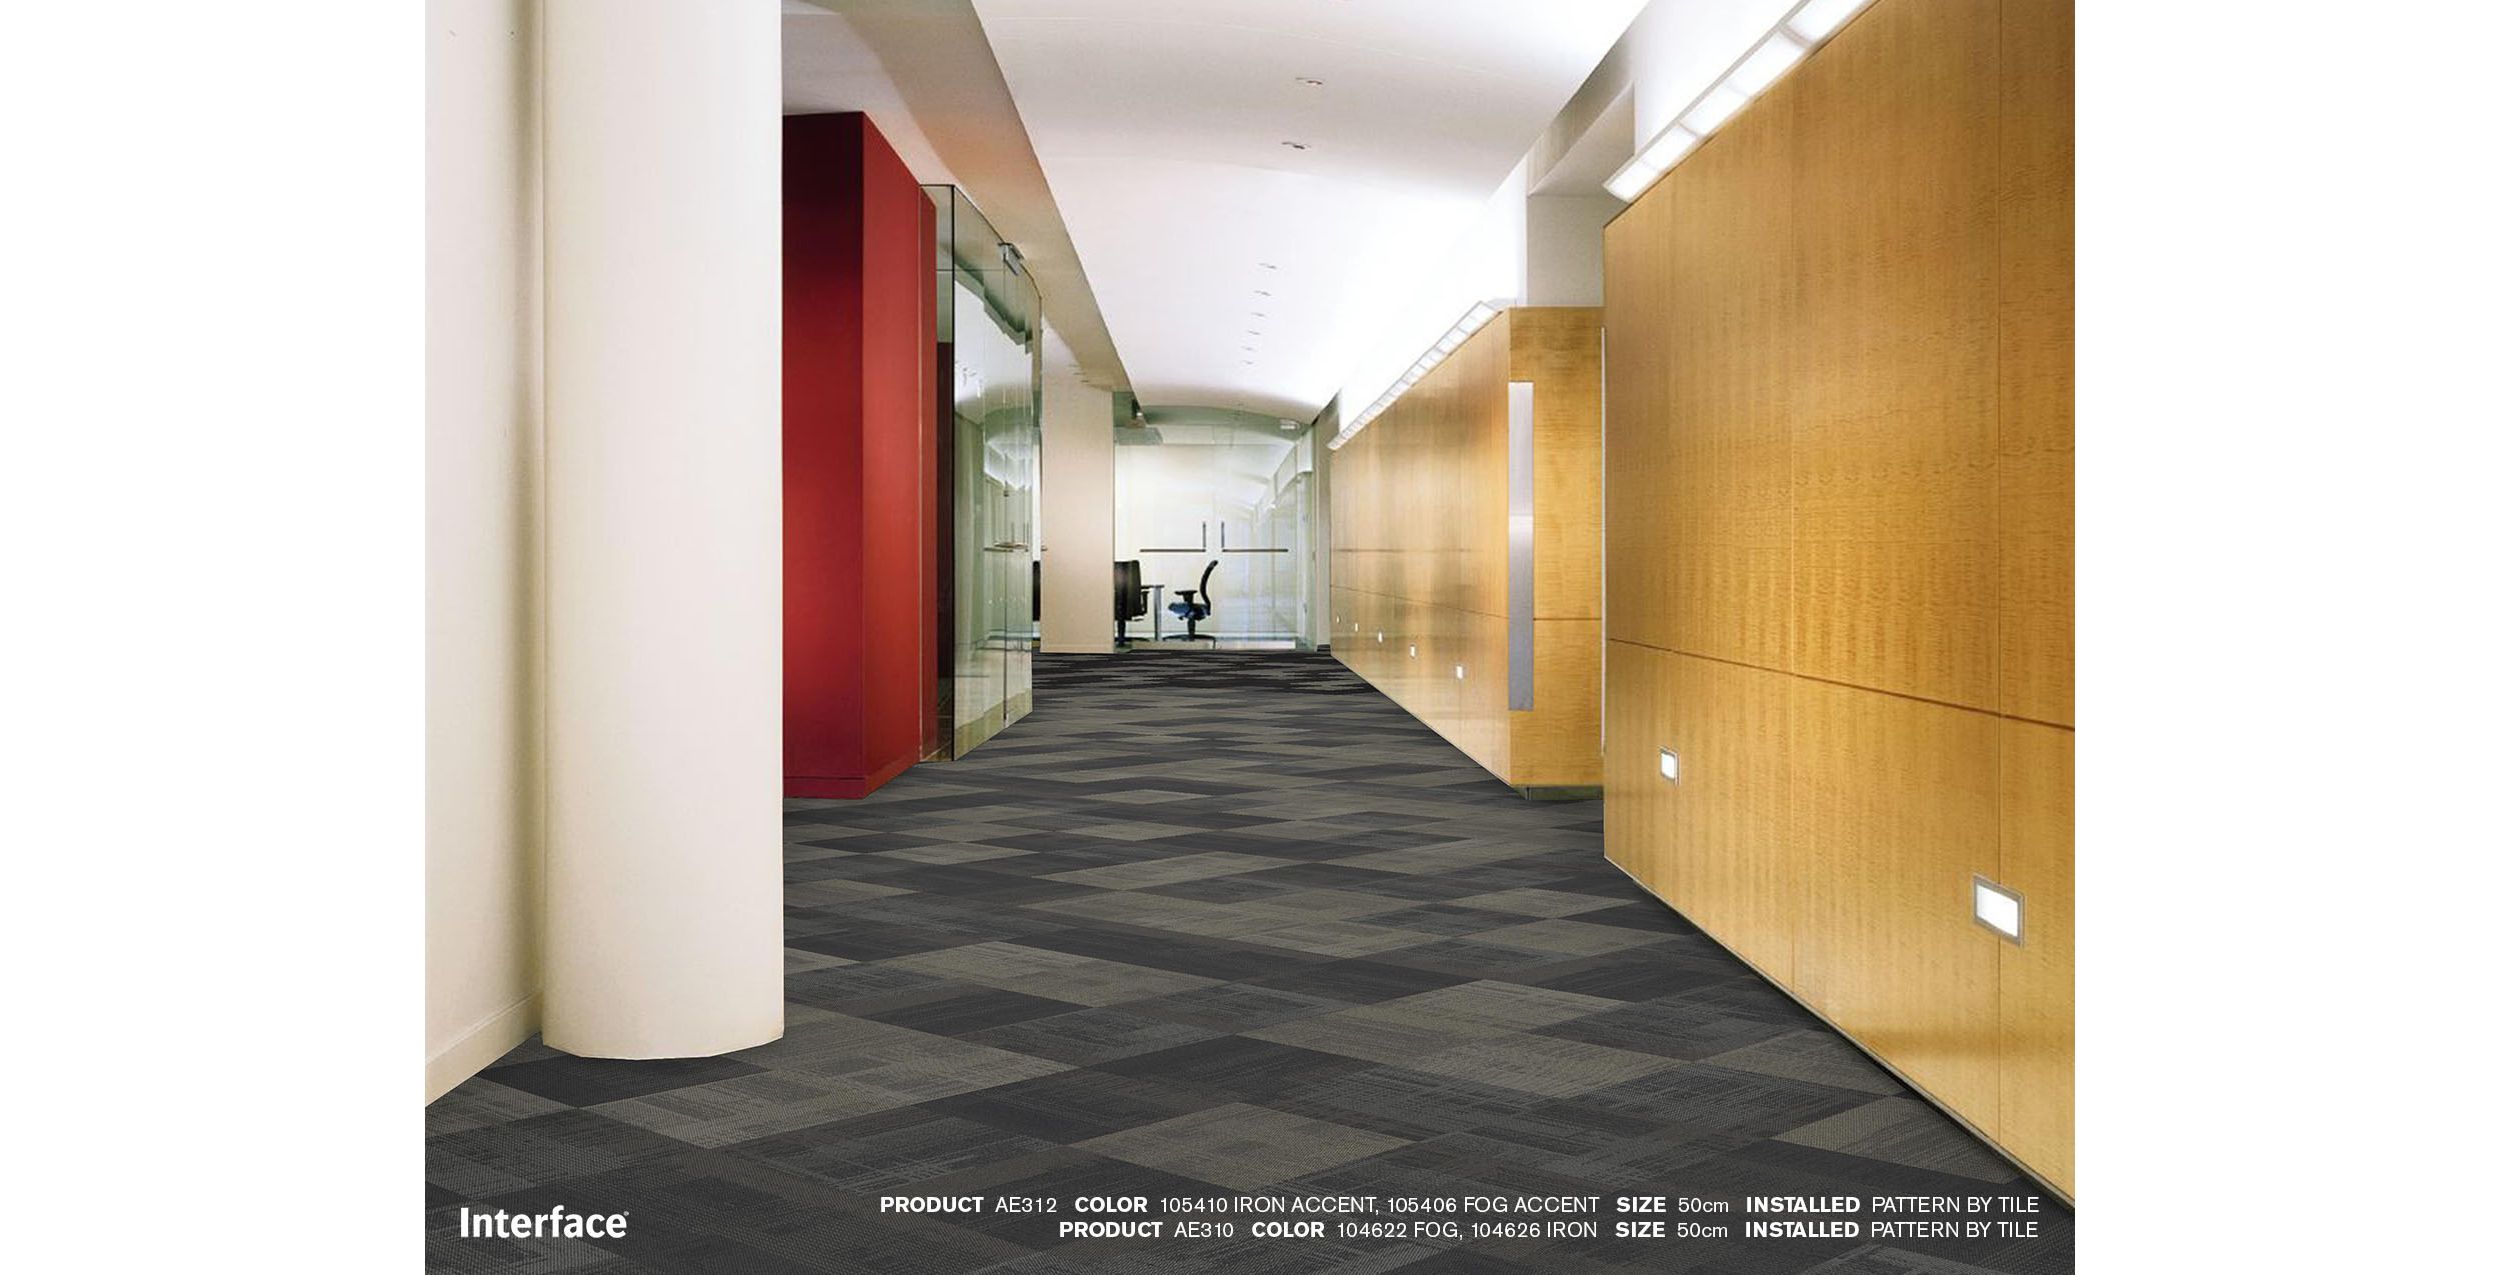 Interface SR899 and AE312 carpet tile in hallway scene imagen número 2